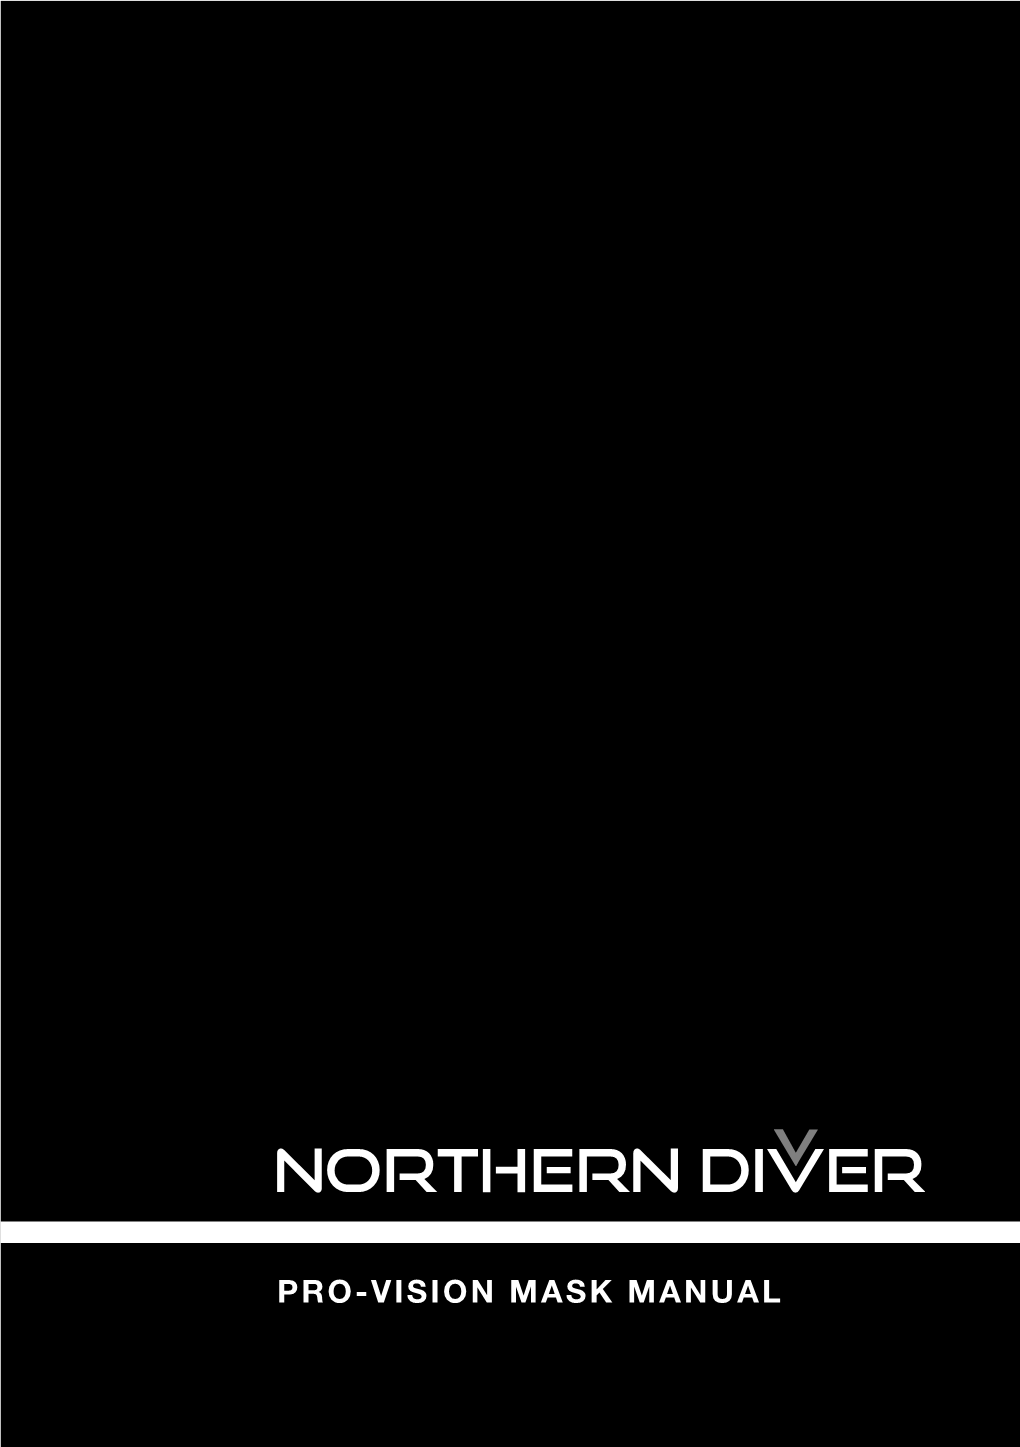 Pro-Vision Mask Manual Northern Diver Pro Vision Mask Manual